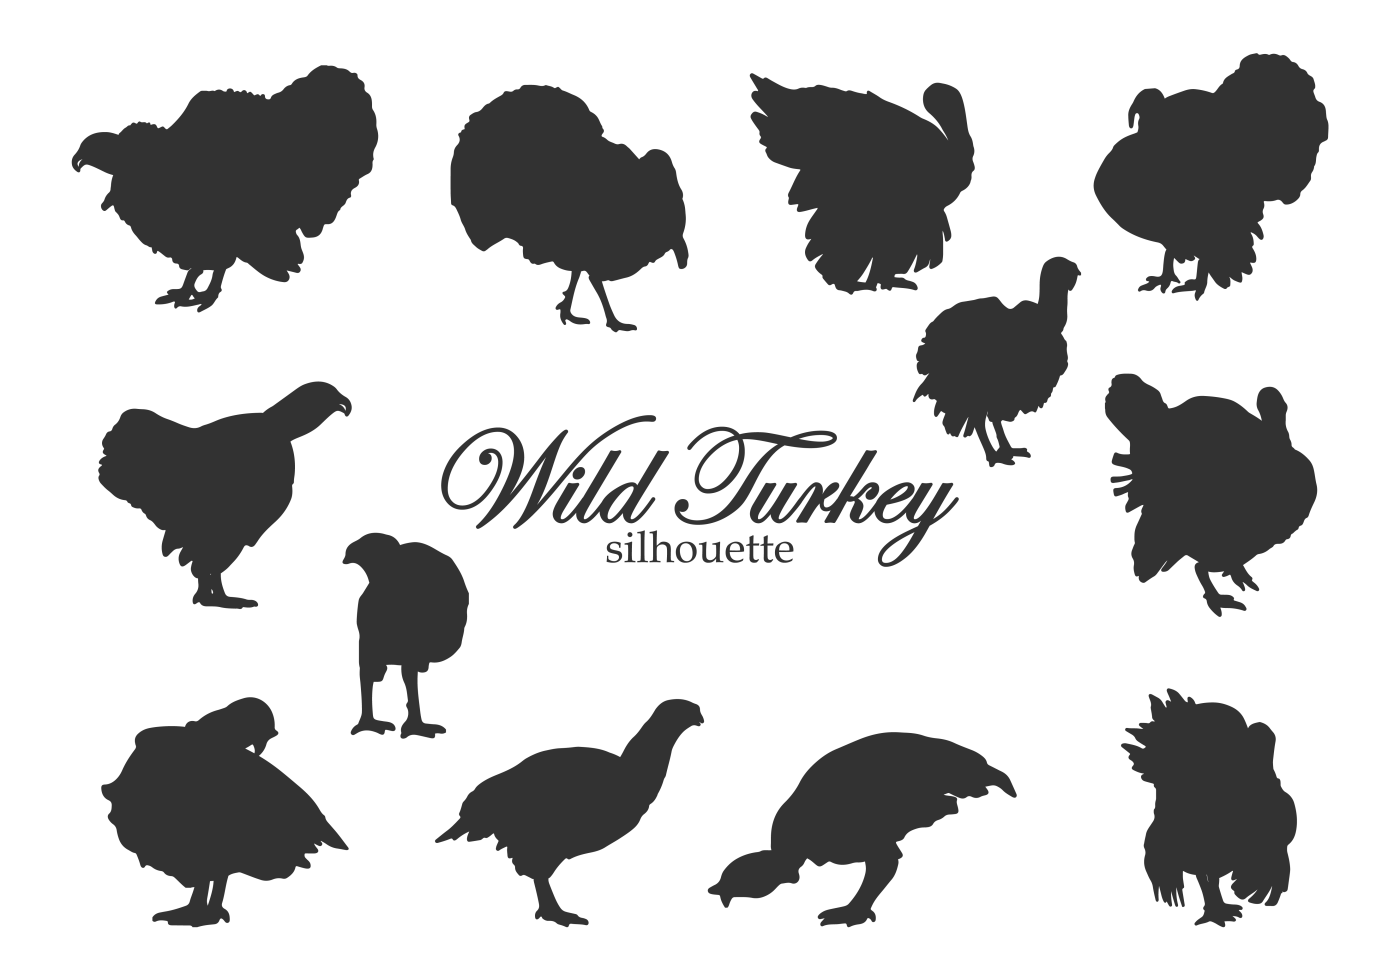 Download Wild Turkey Silhouettes - Download Free Vectors, Clipart Graphics & Vector Art